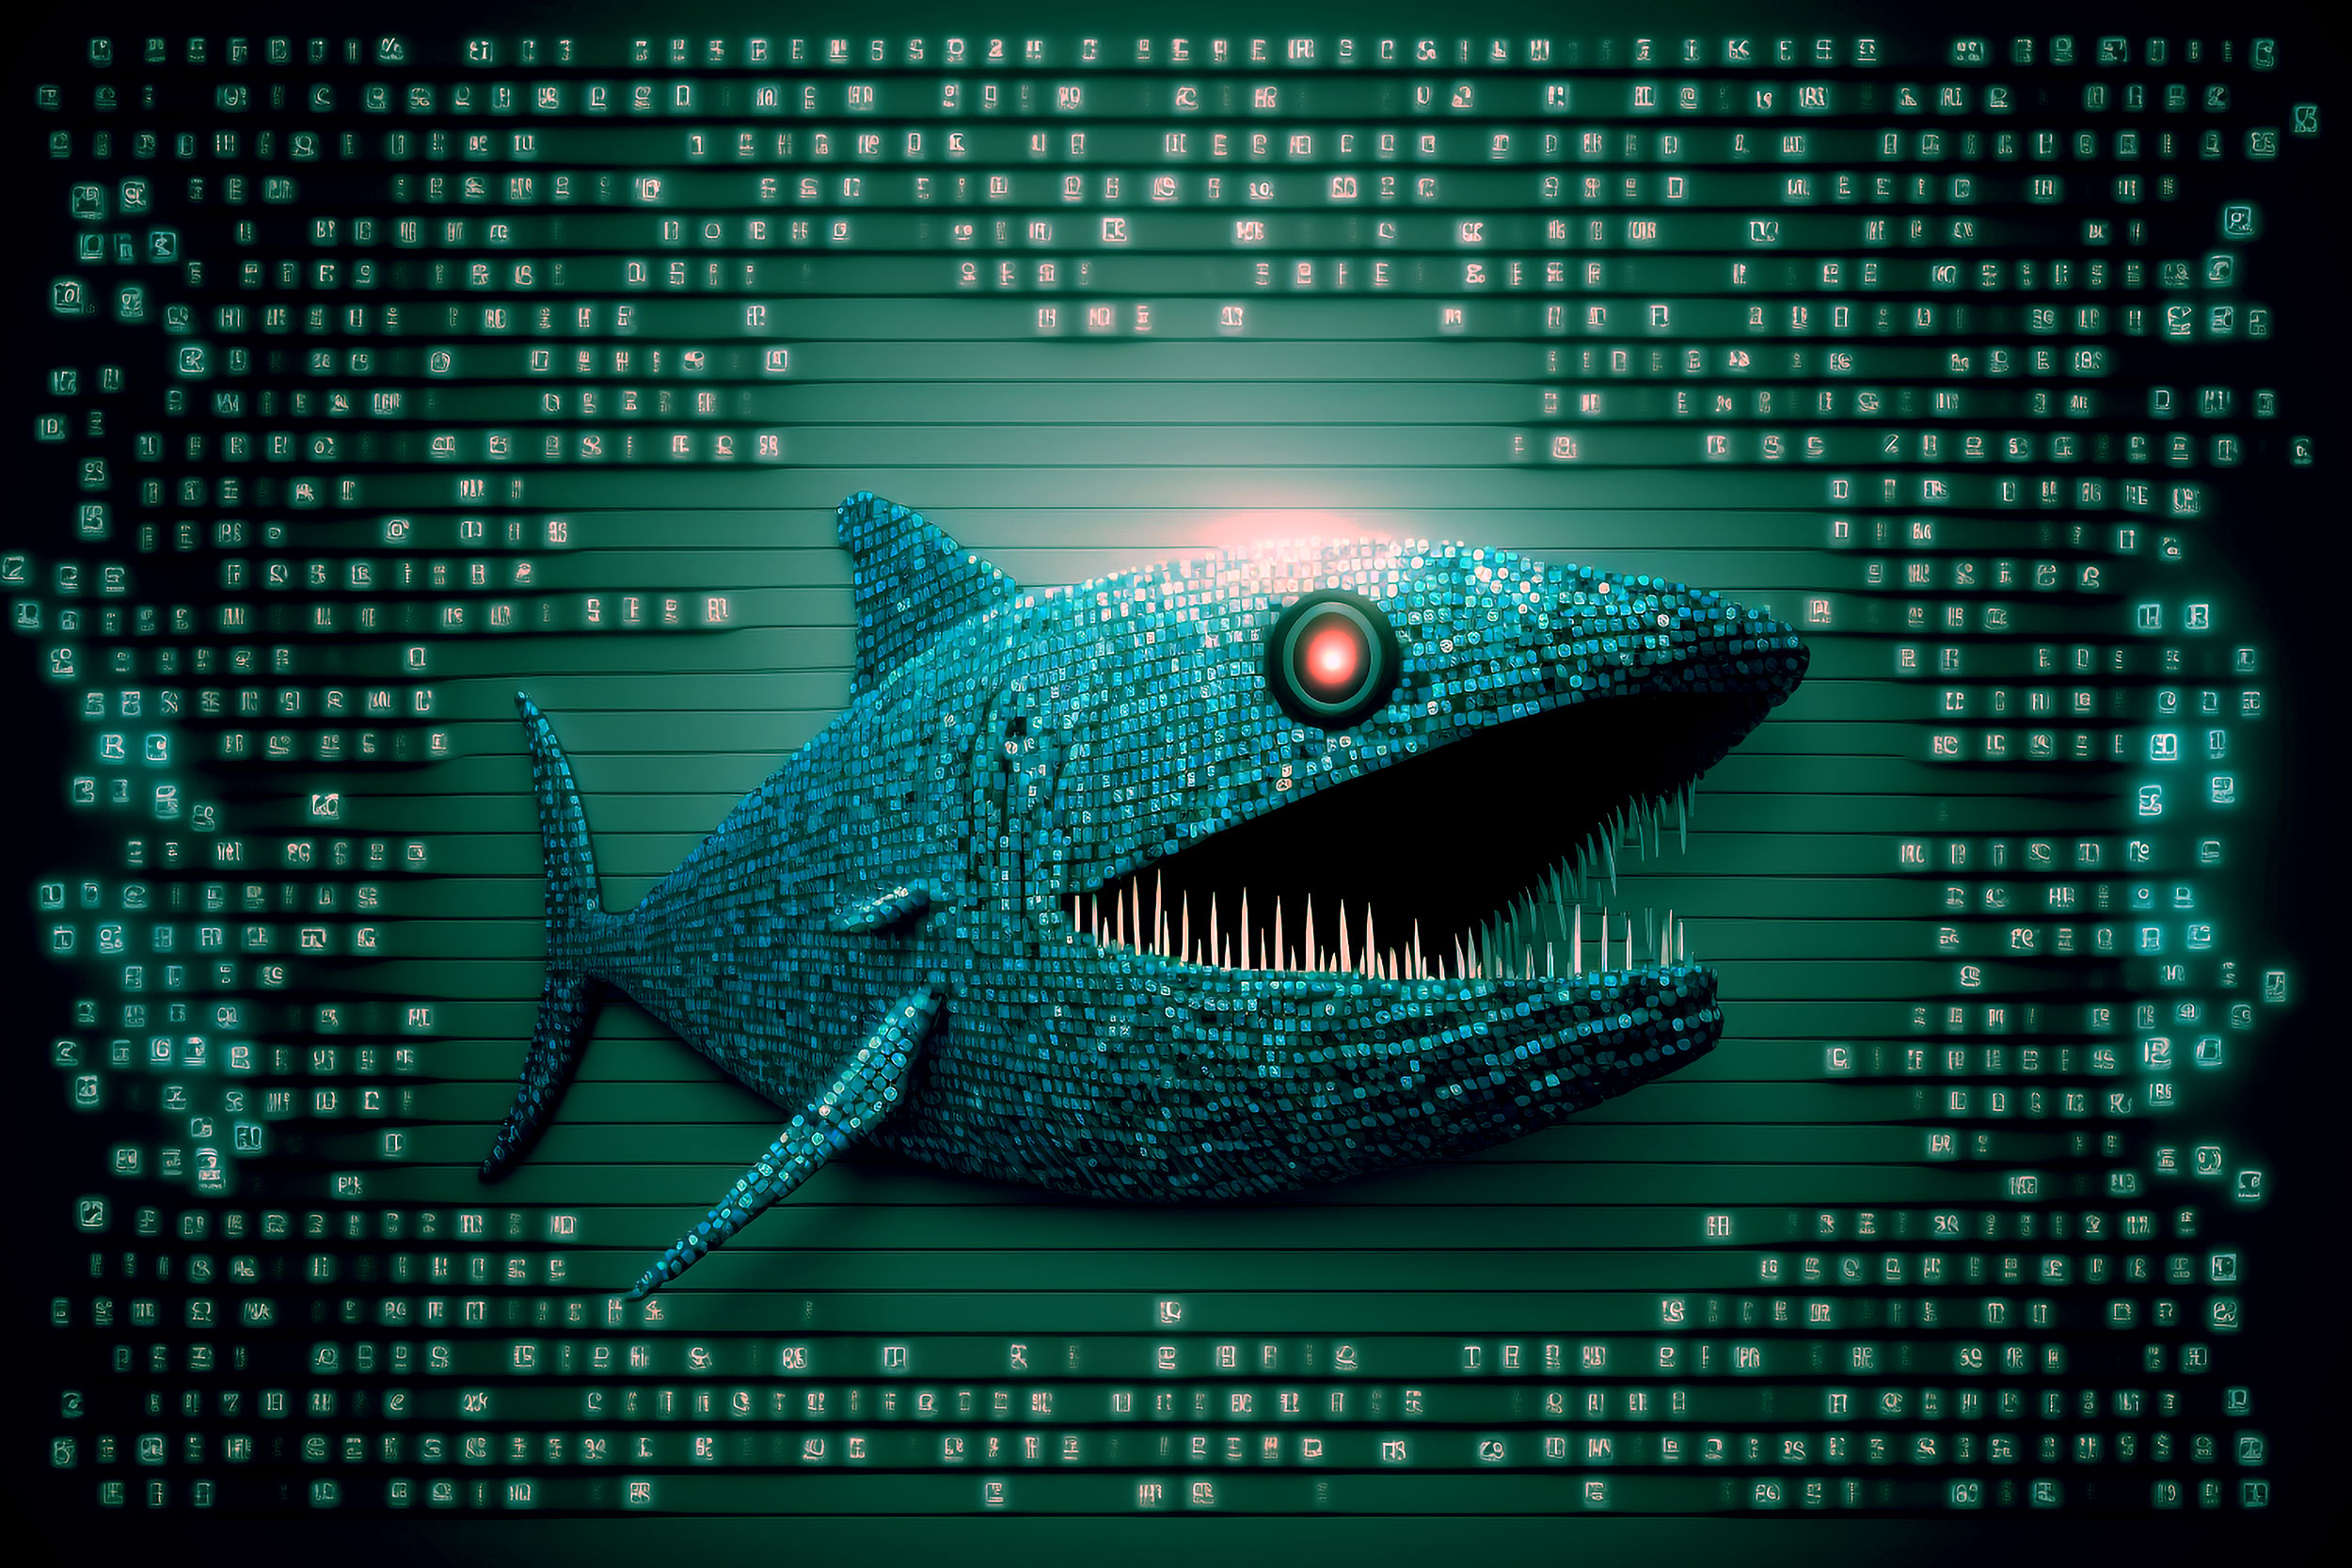 Digital fish with sharp teeth in digital water